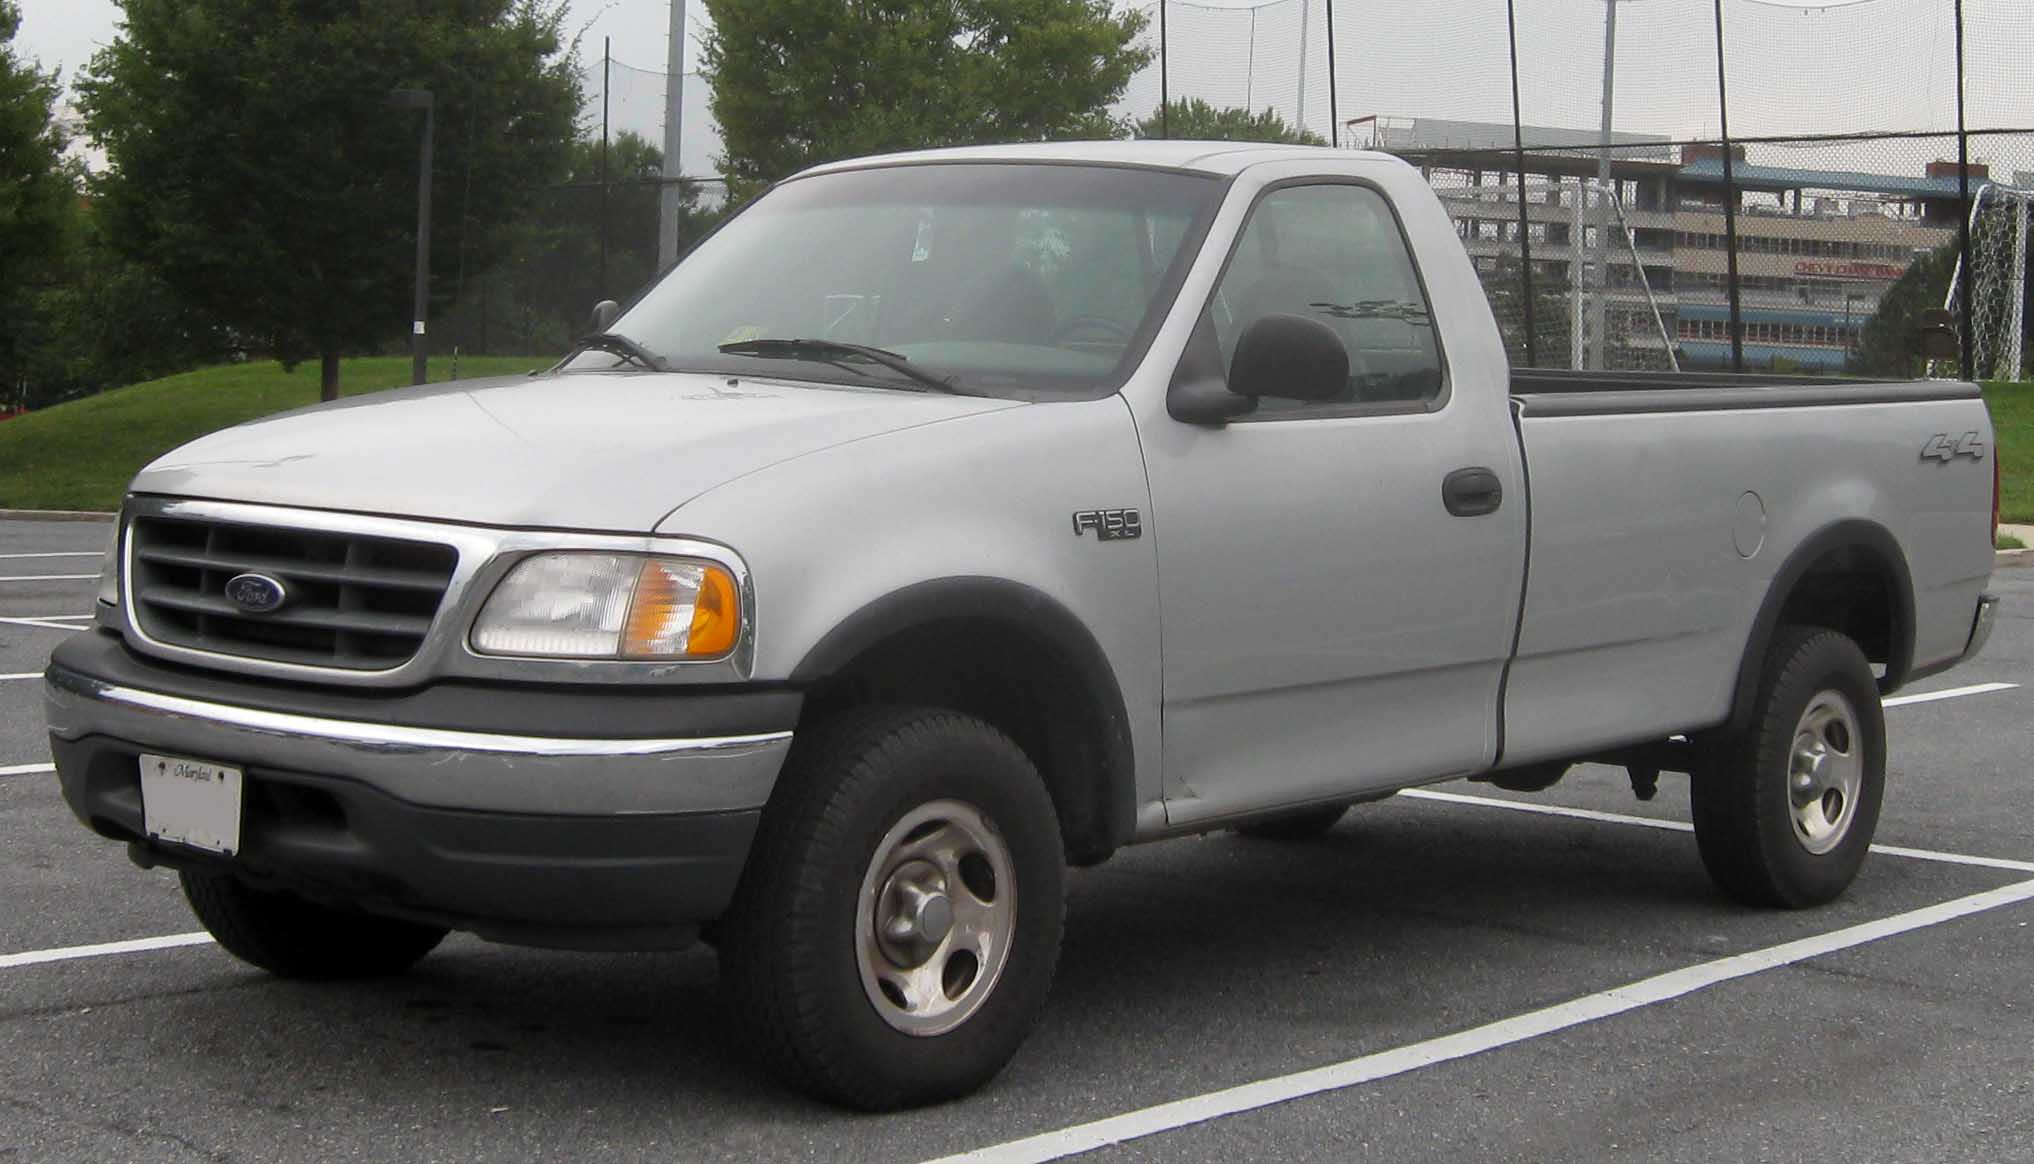 Ford F-Series (tenth generation) - Wikipedia